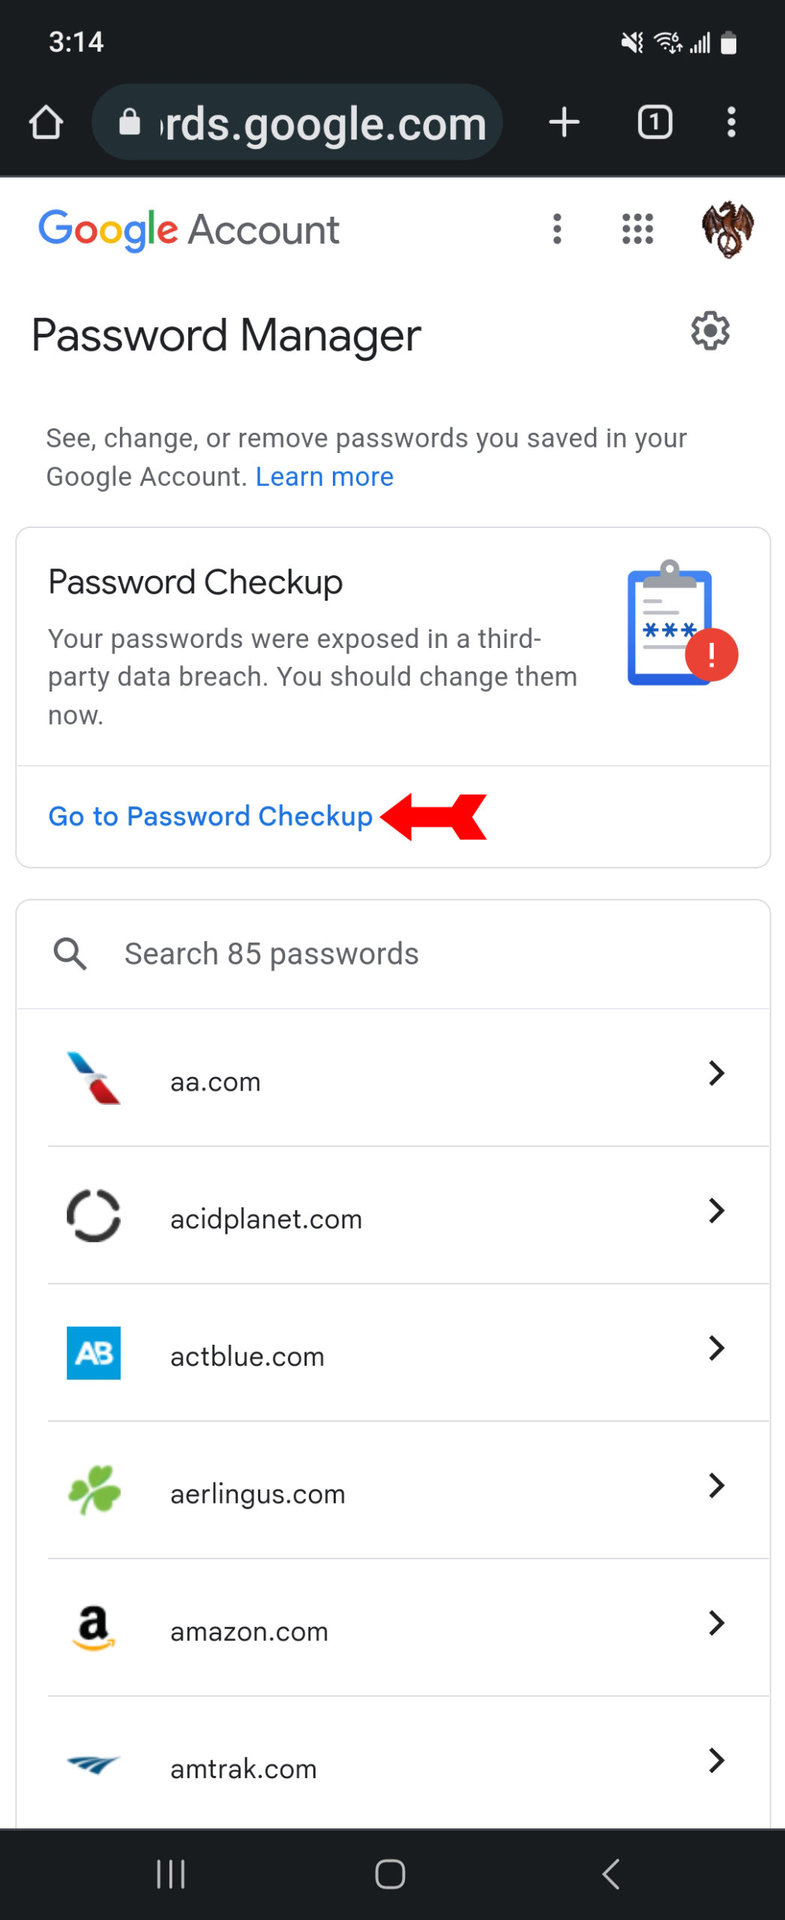 Saved Passwords Go to Password Checkup 1